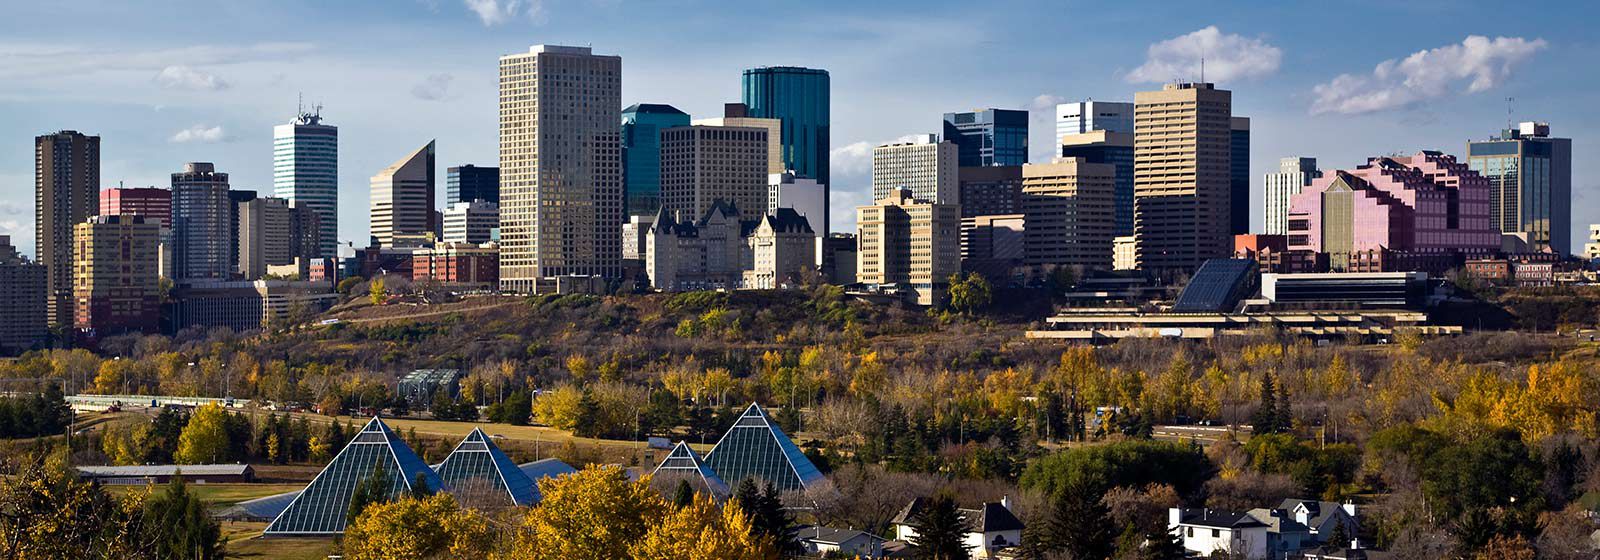 Skyline of Edmonton